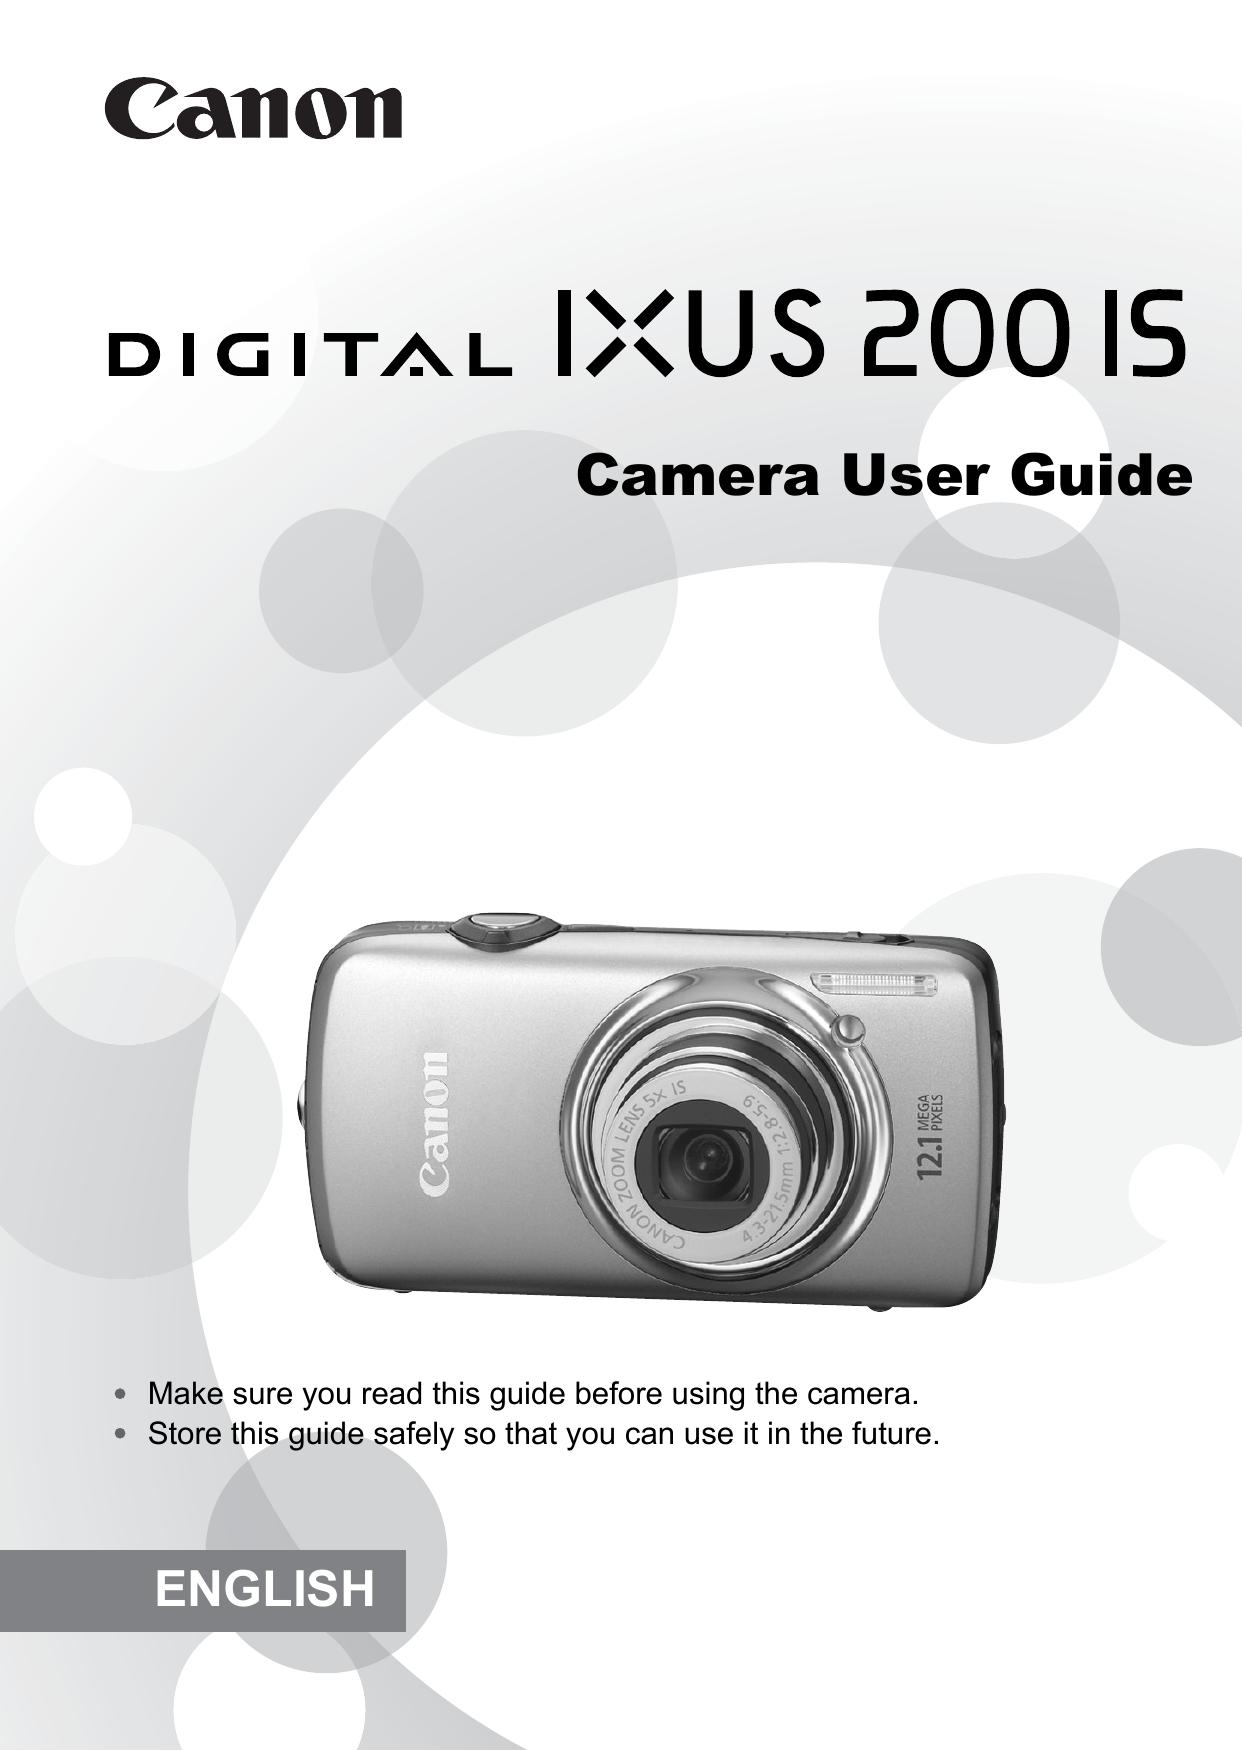 Canon 200 IS Digital Camera User Manual